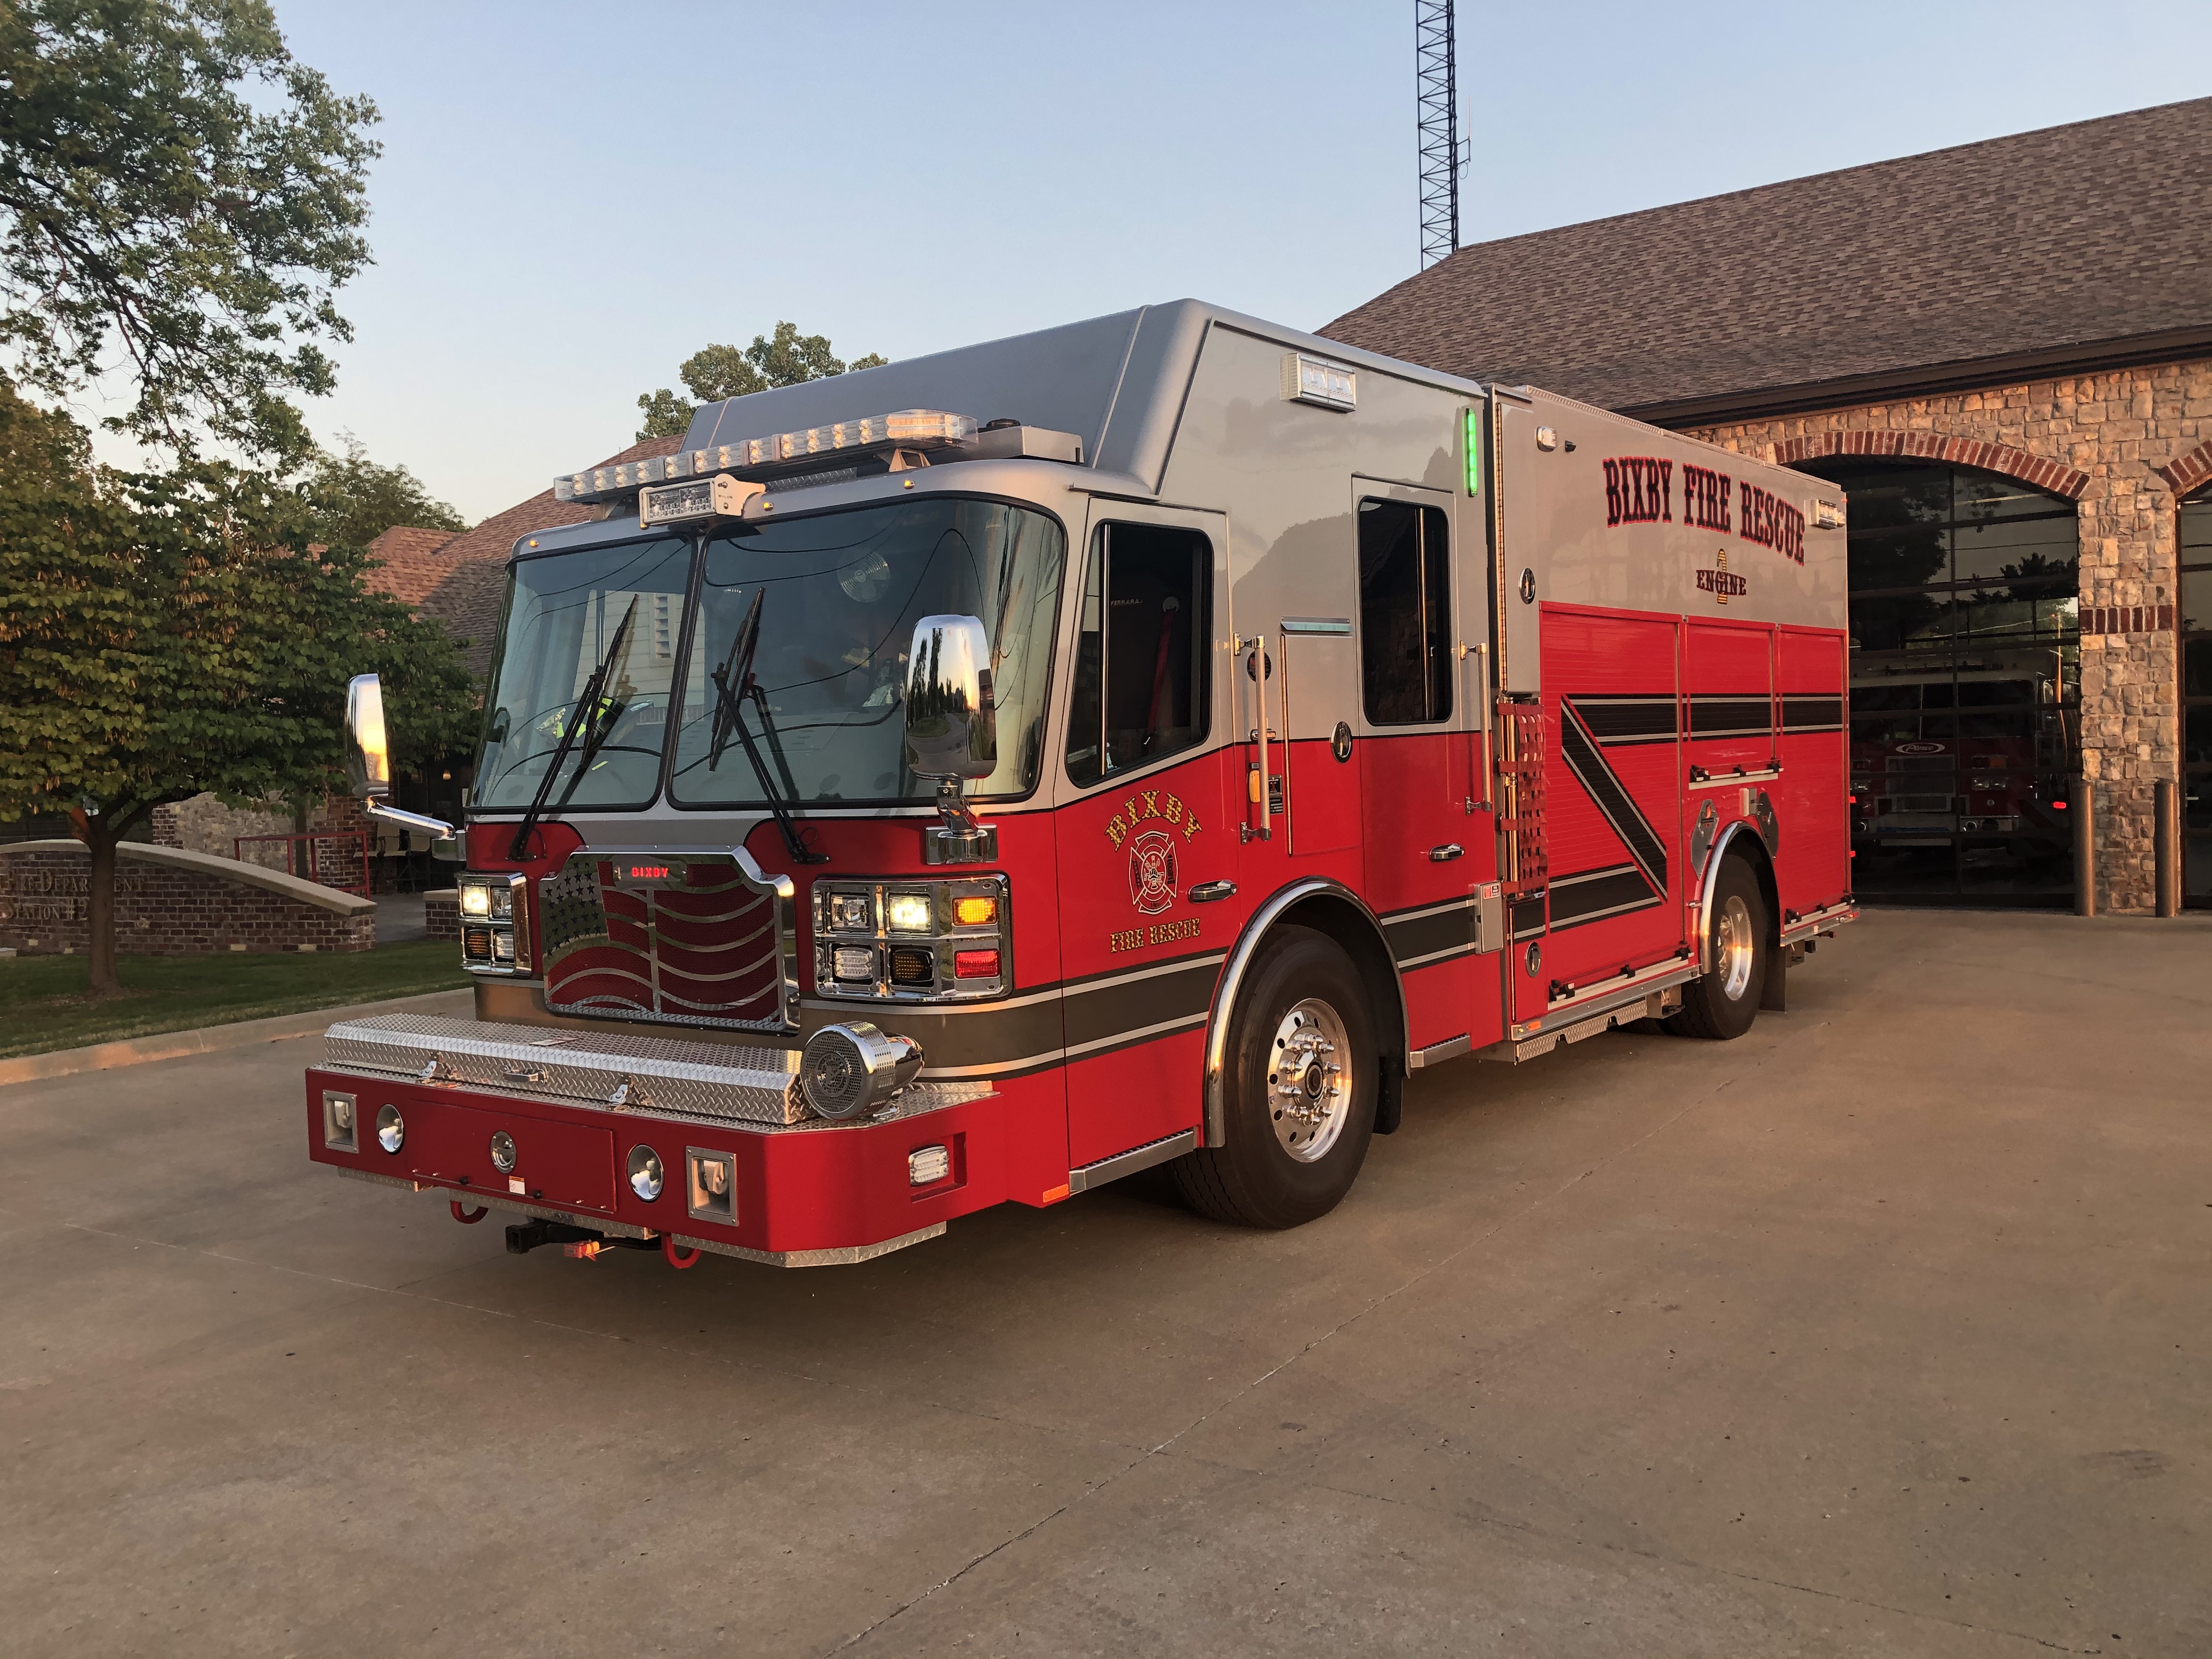 Bixby Fire Truck - 2815